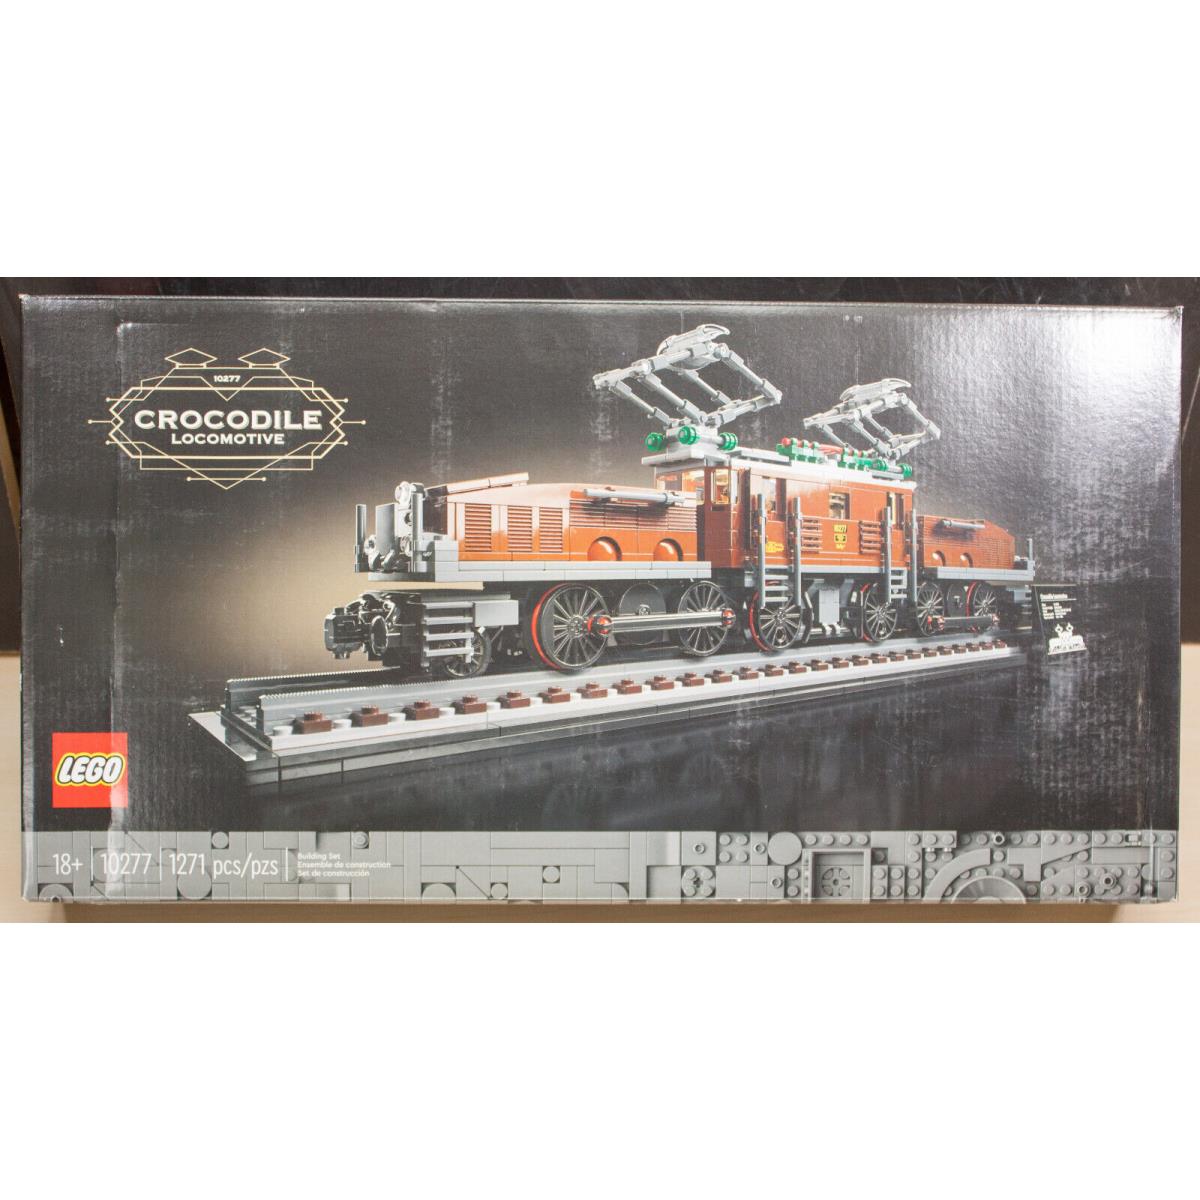 Lego Creator Expert Crocodile Locomotive 10277 Box